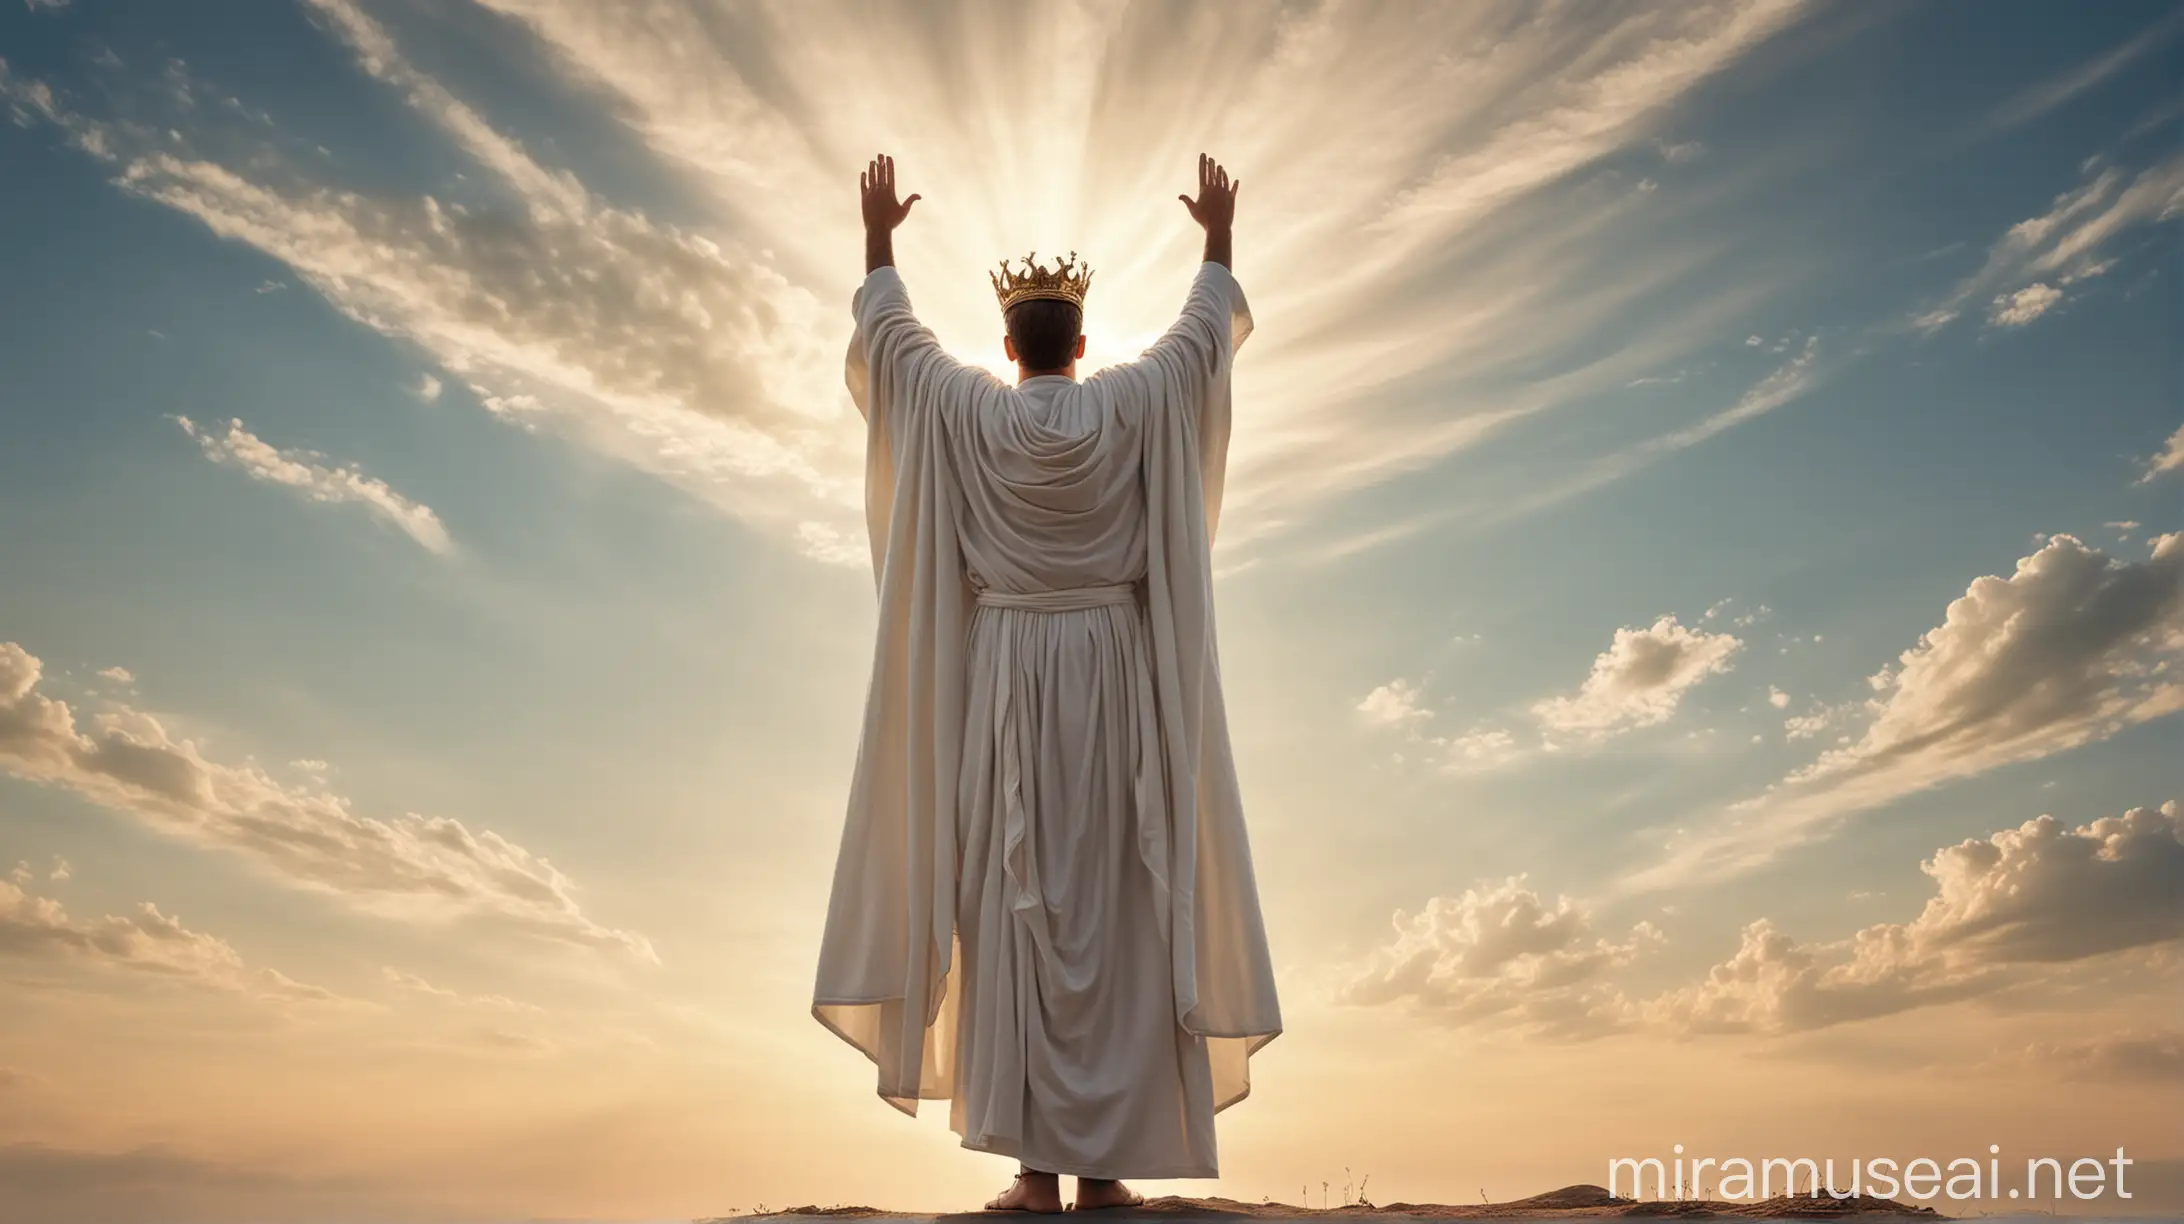 Biblical Figure King Standing in Triumph under Peaceful Sky